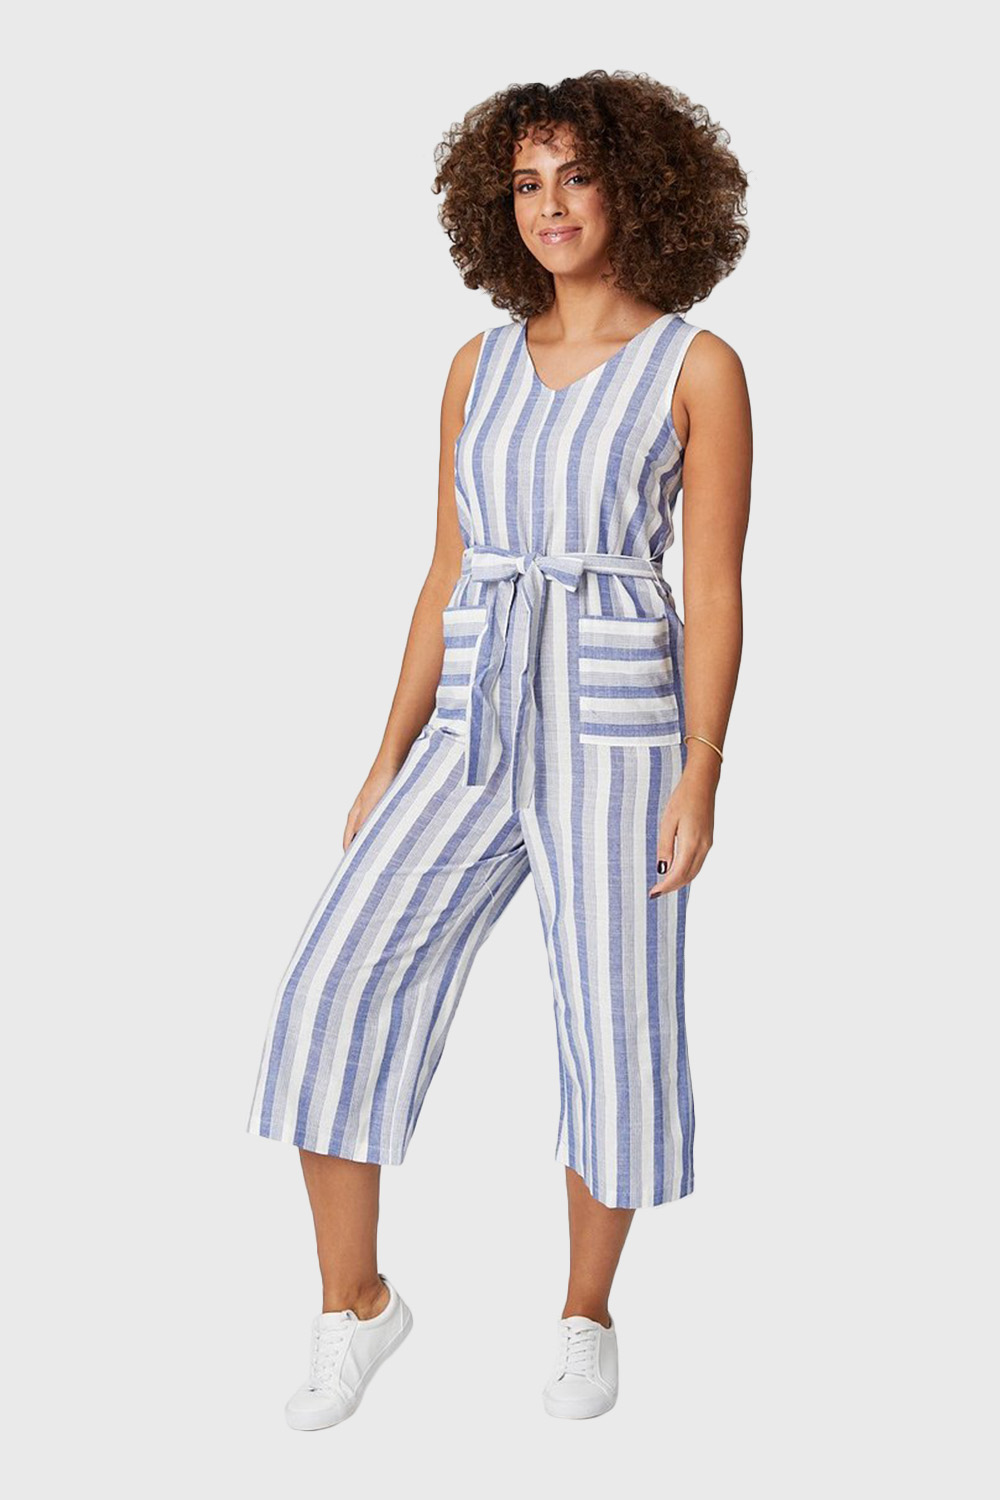 8 x New Designer Women's  Mix size STELLA MORGAN striped culottes tie waist linen jumpsuit RRP £39.99 each  Ref (A61) 